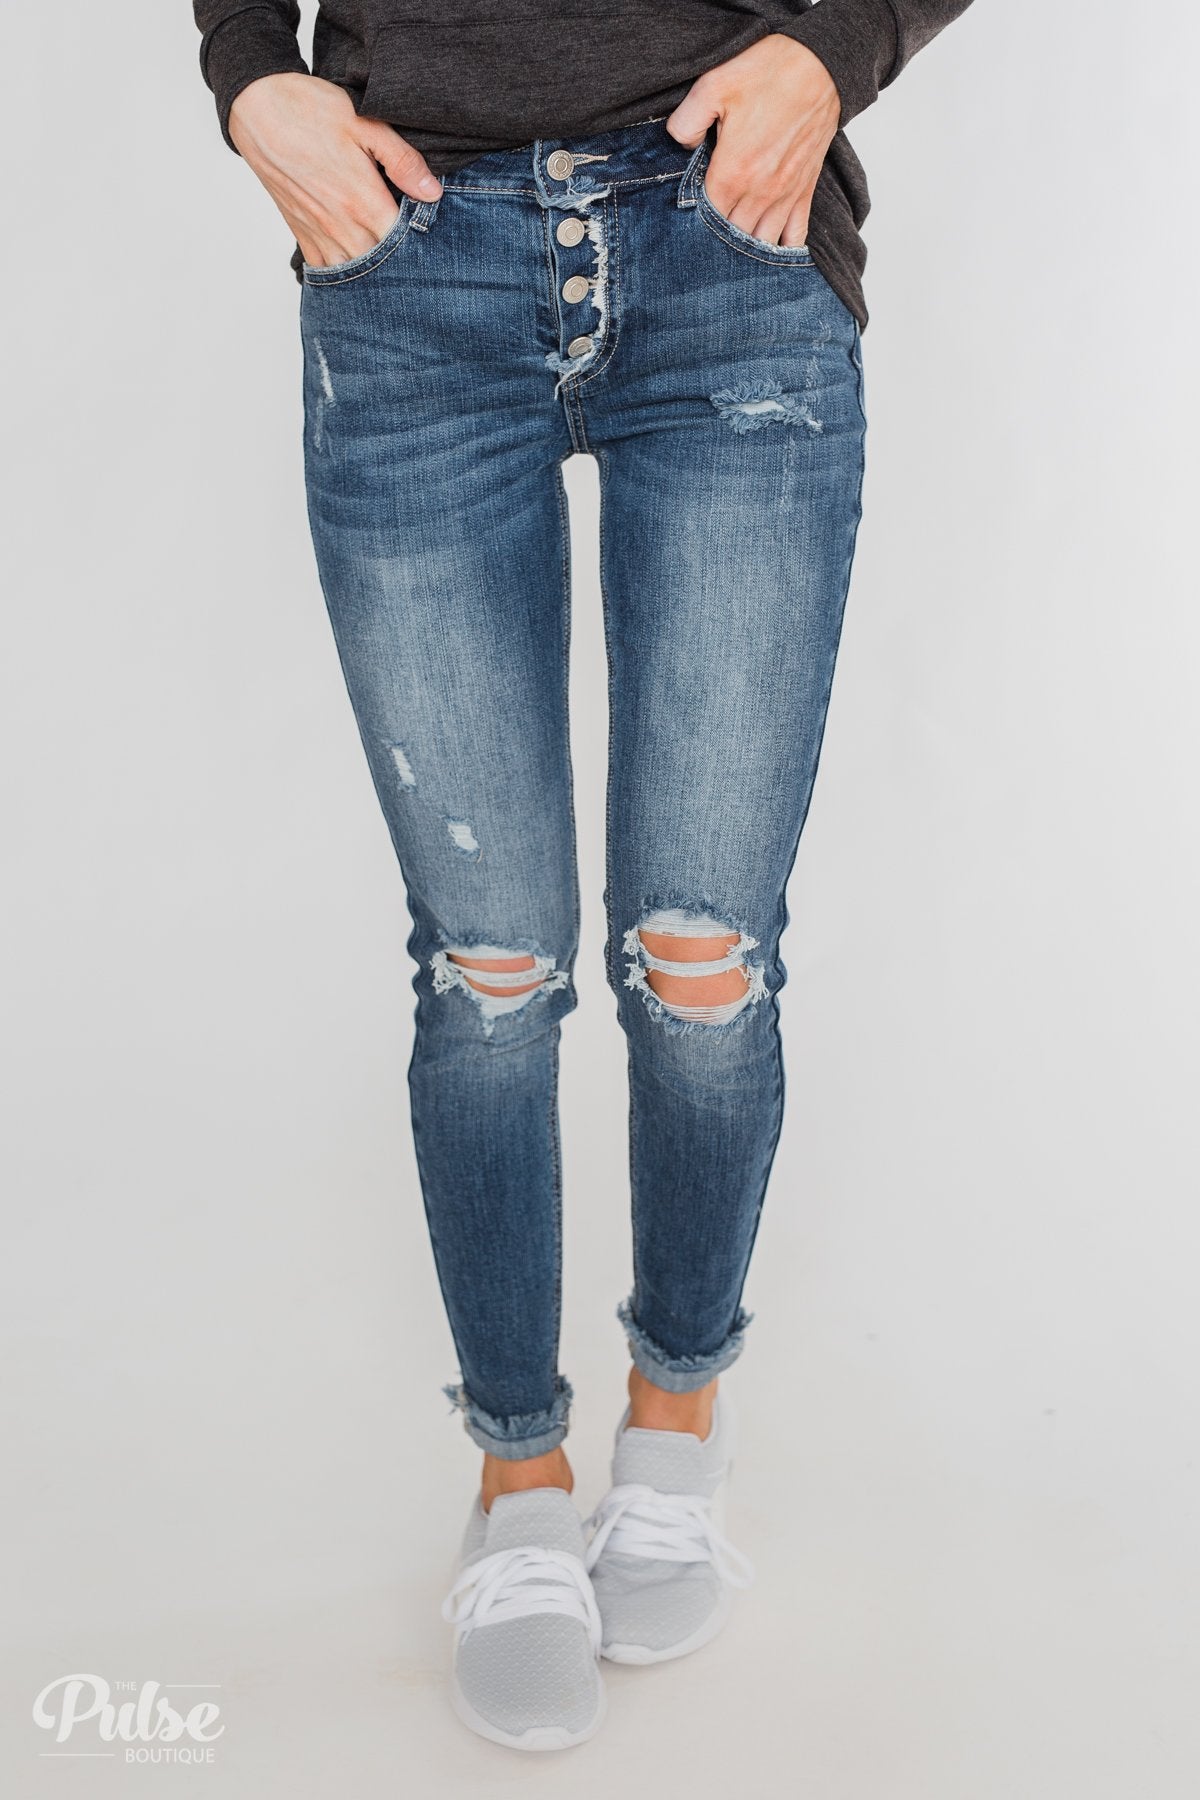 C'est Toi Distressed Skinny Jeans- Cecilia Wash